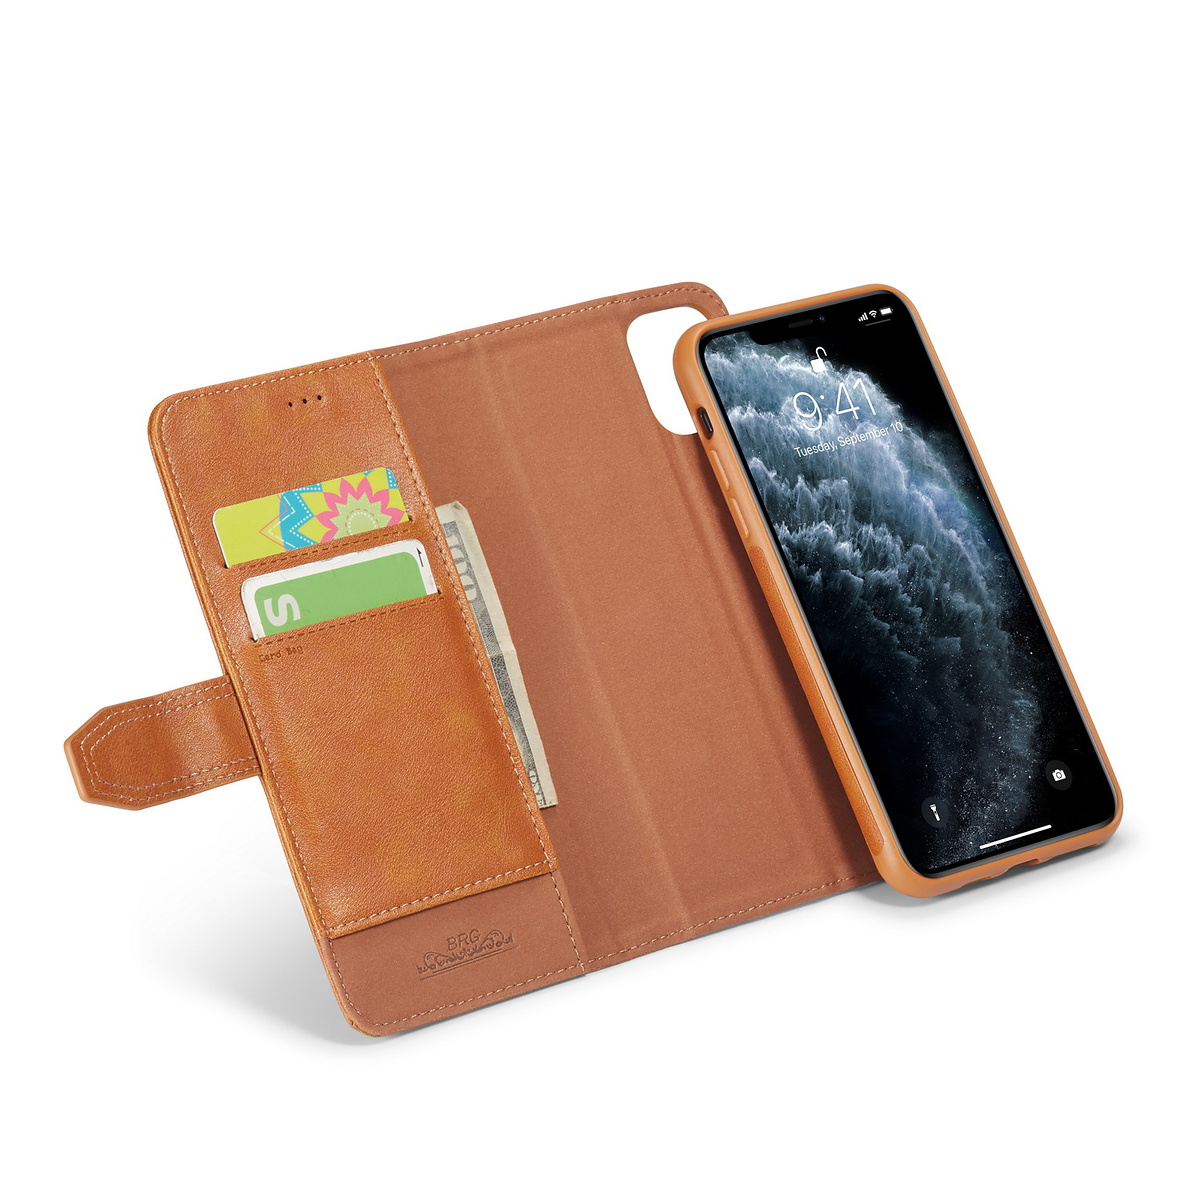 BRG Luxury plånboksfodral med ställ, iPhone 11 Pro, brun